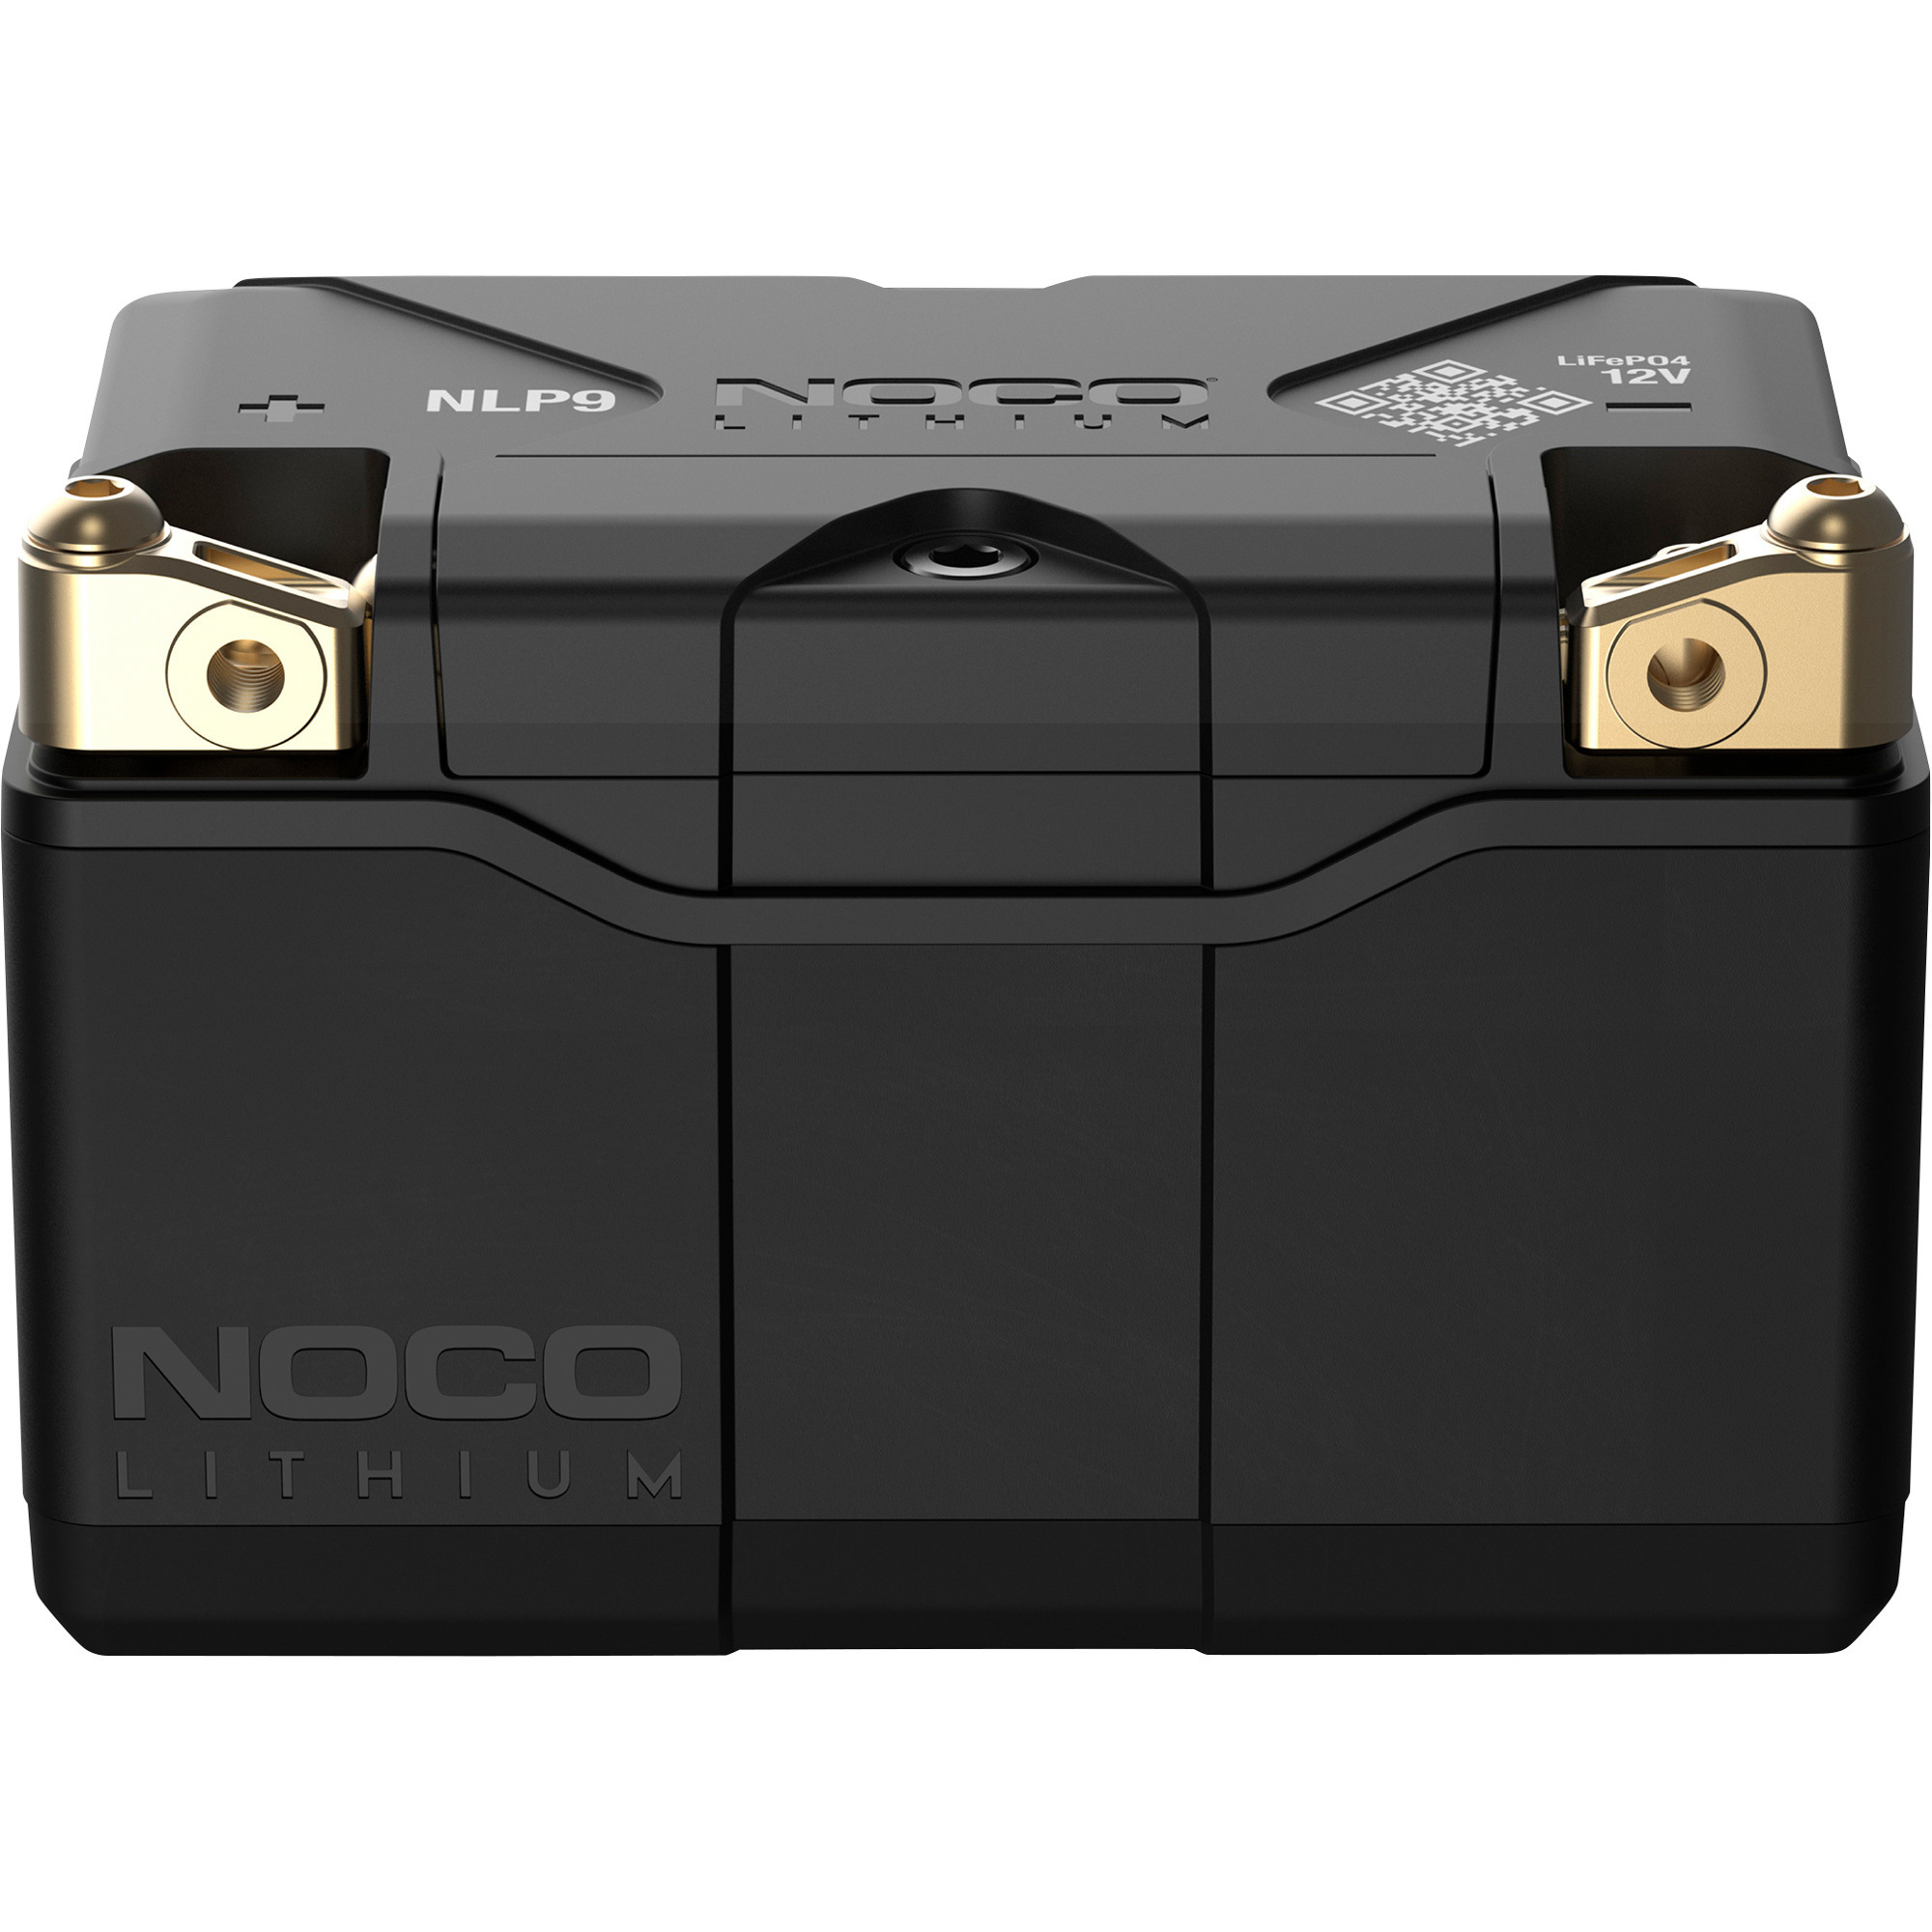 Noco Lithium Powersport Battery â 12 Volts, 400 Amps, Model NLP9